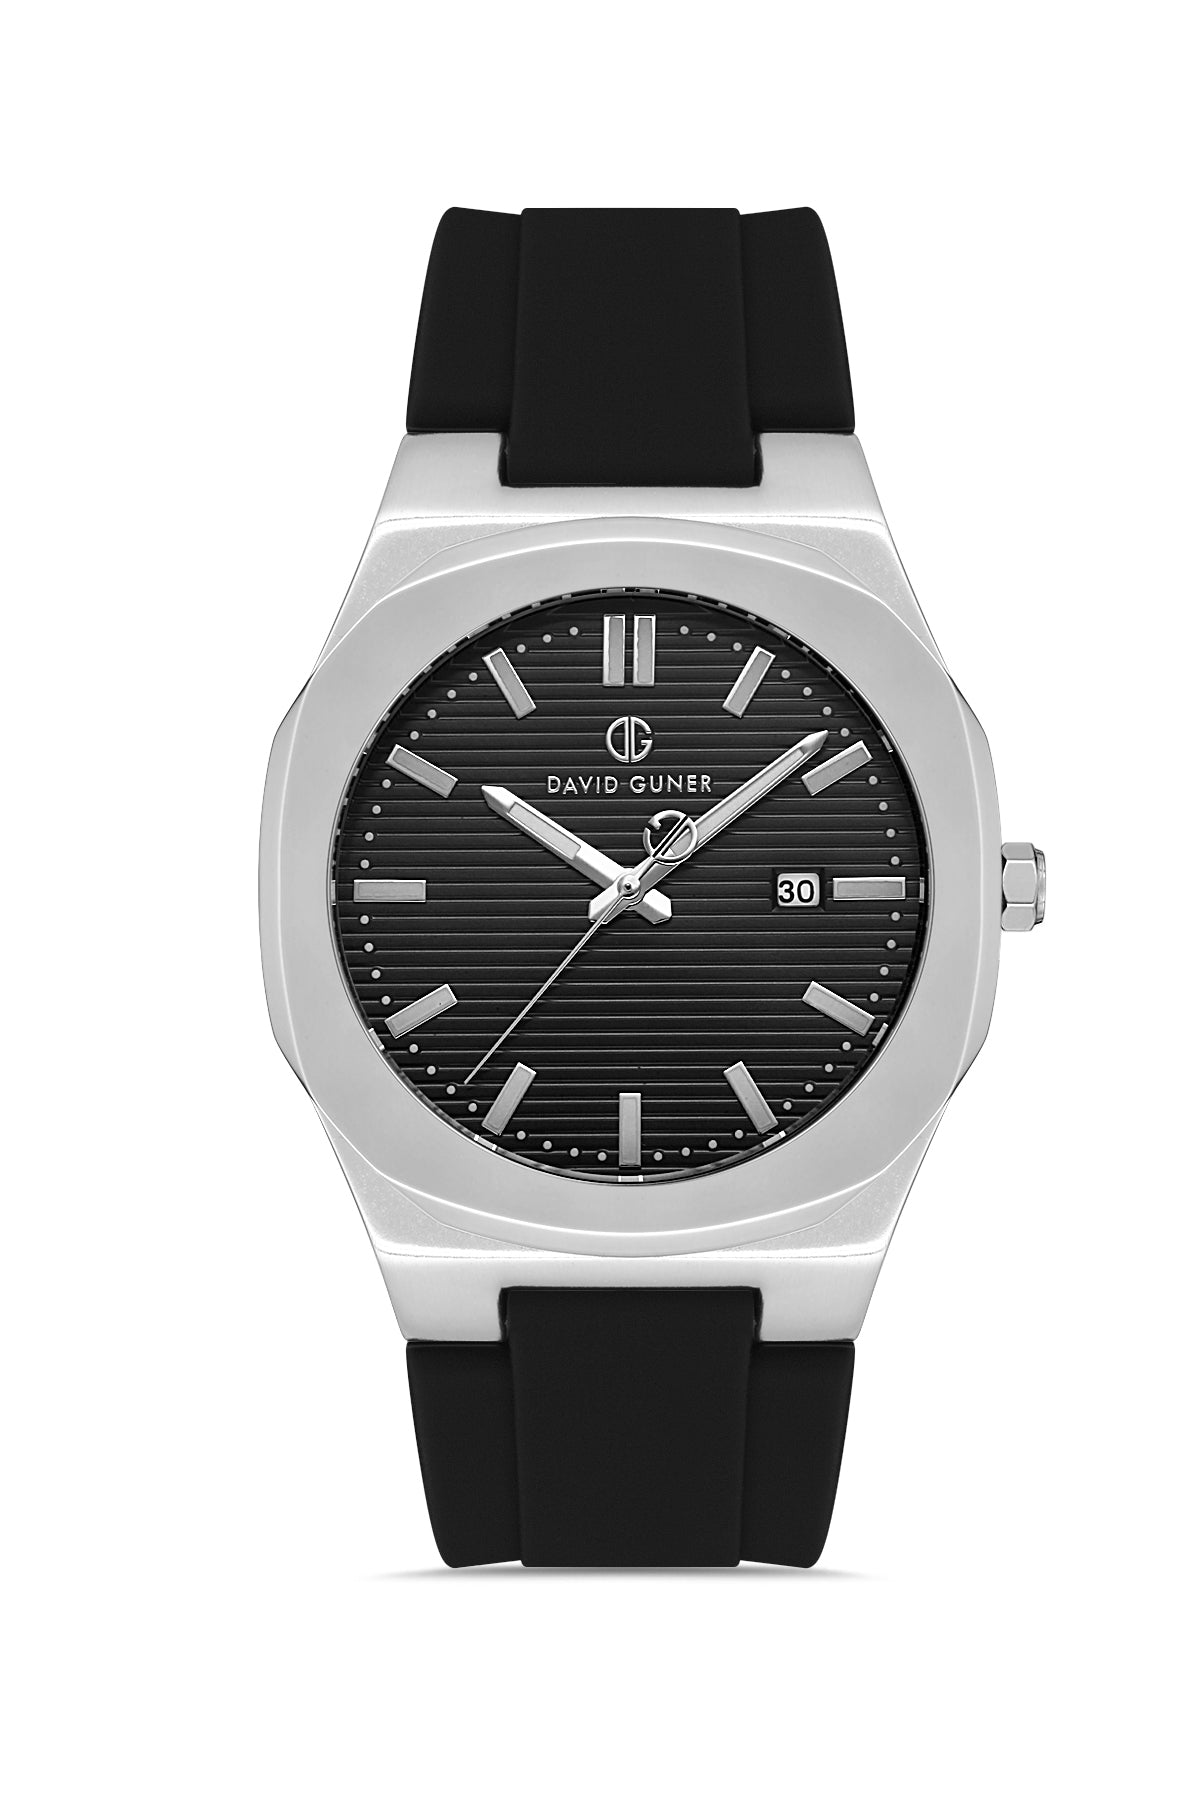 DAVID GUNER Silver Black Coated Black Dial Men's Wristwatch